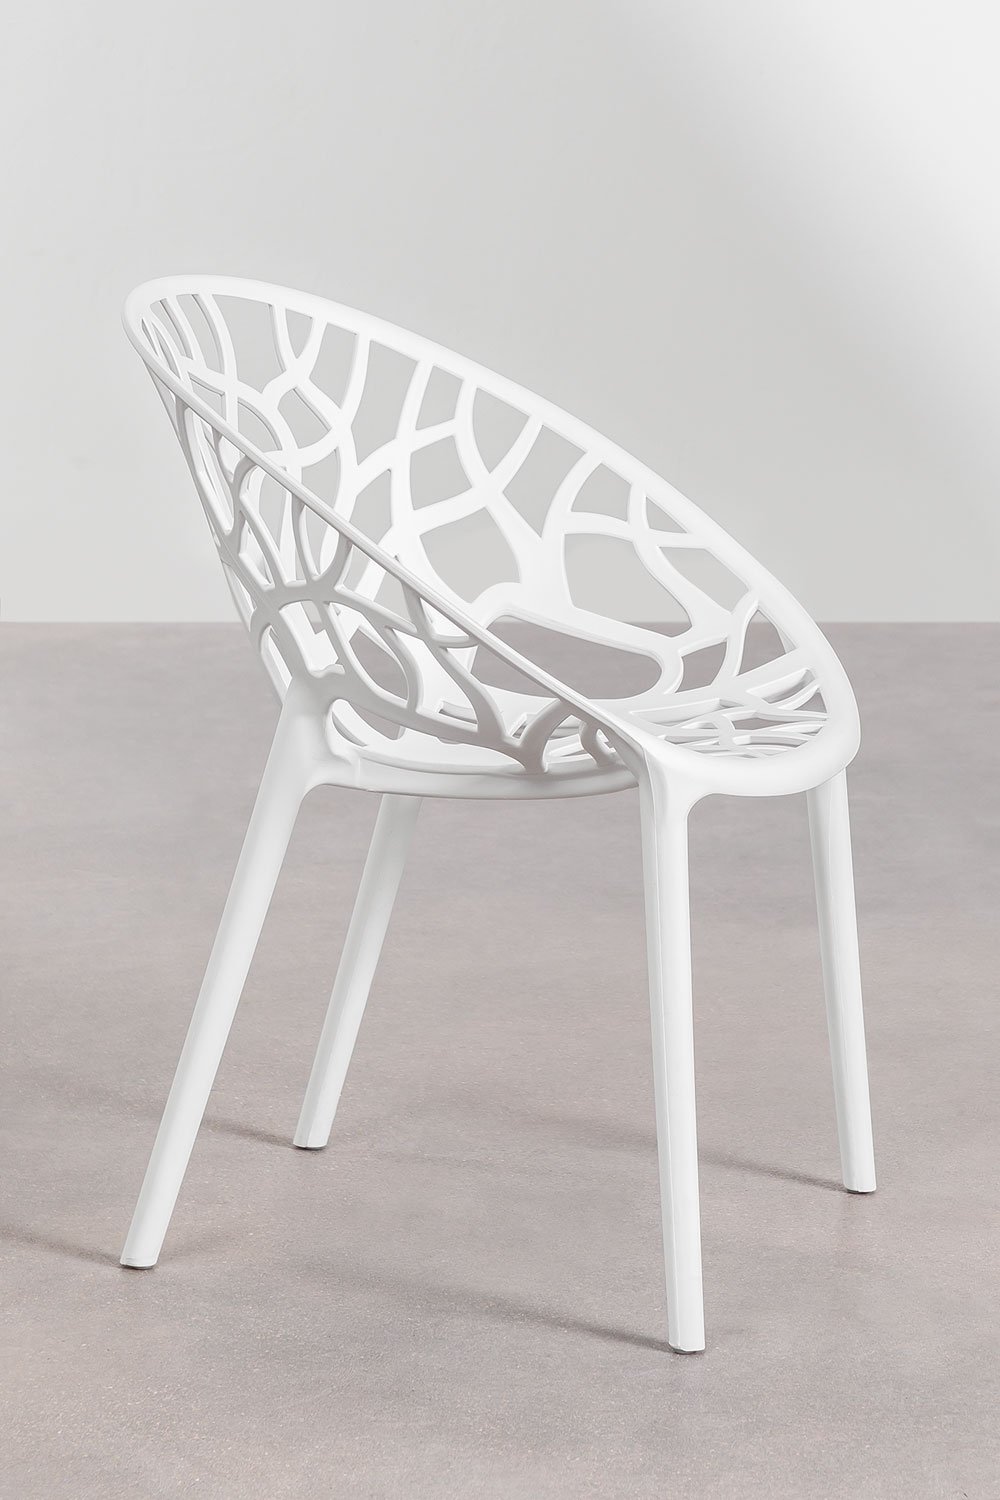 Ores Stackable Garden Chair, gallery image 2